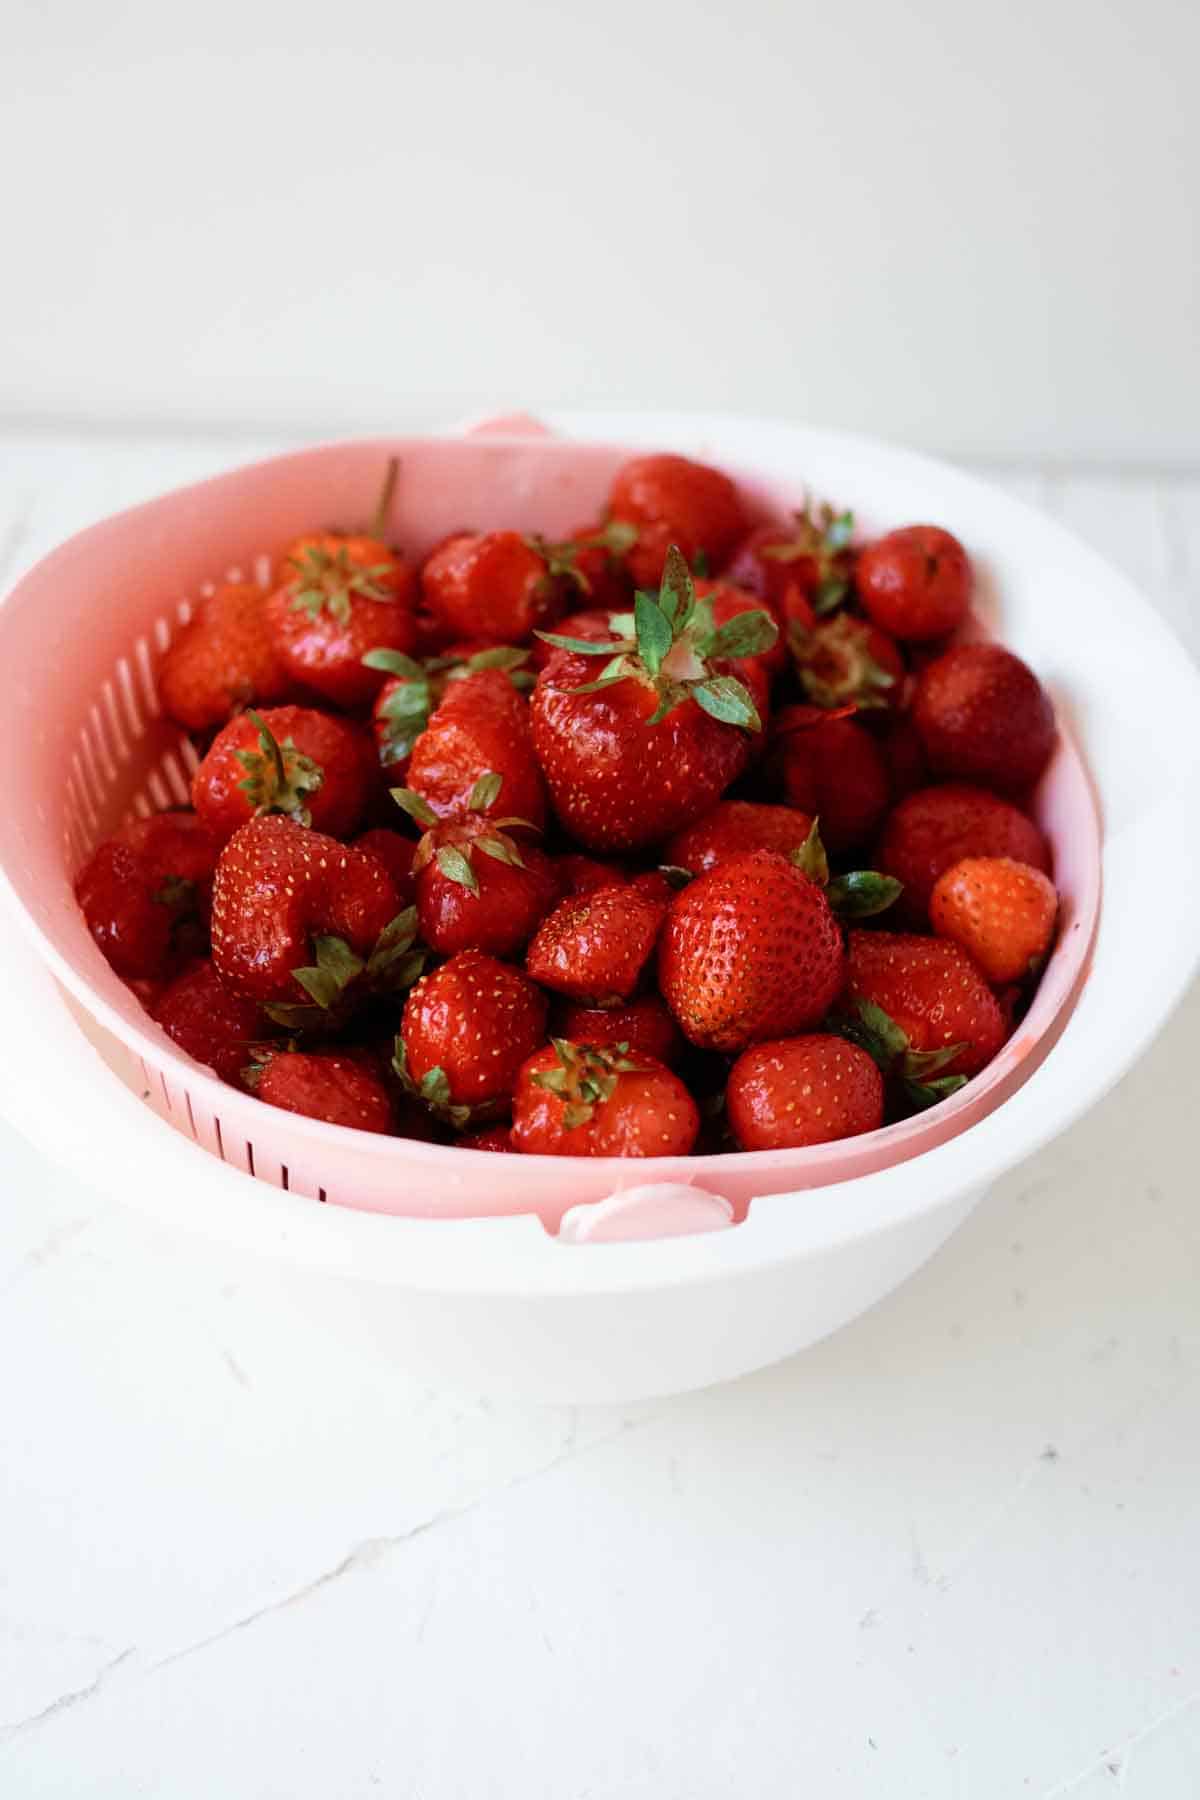 washing strawberries in strainer.